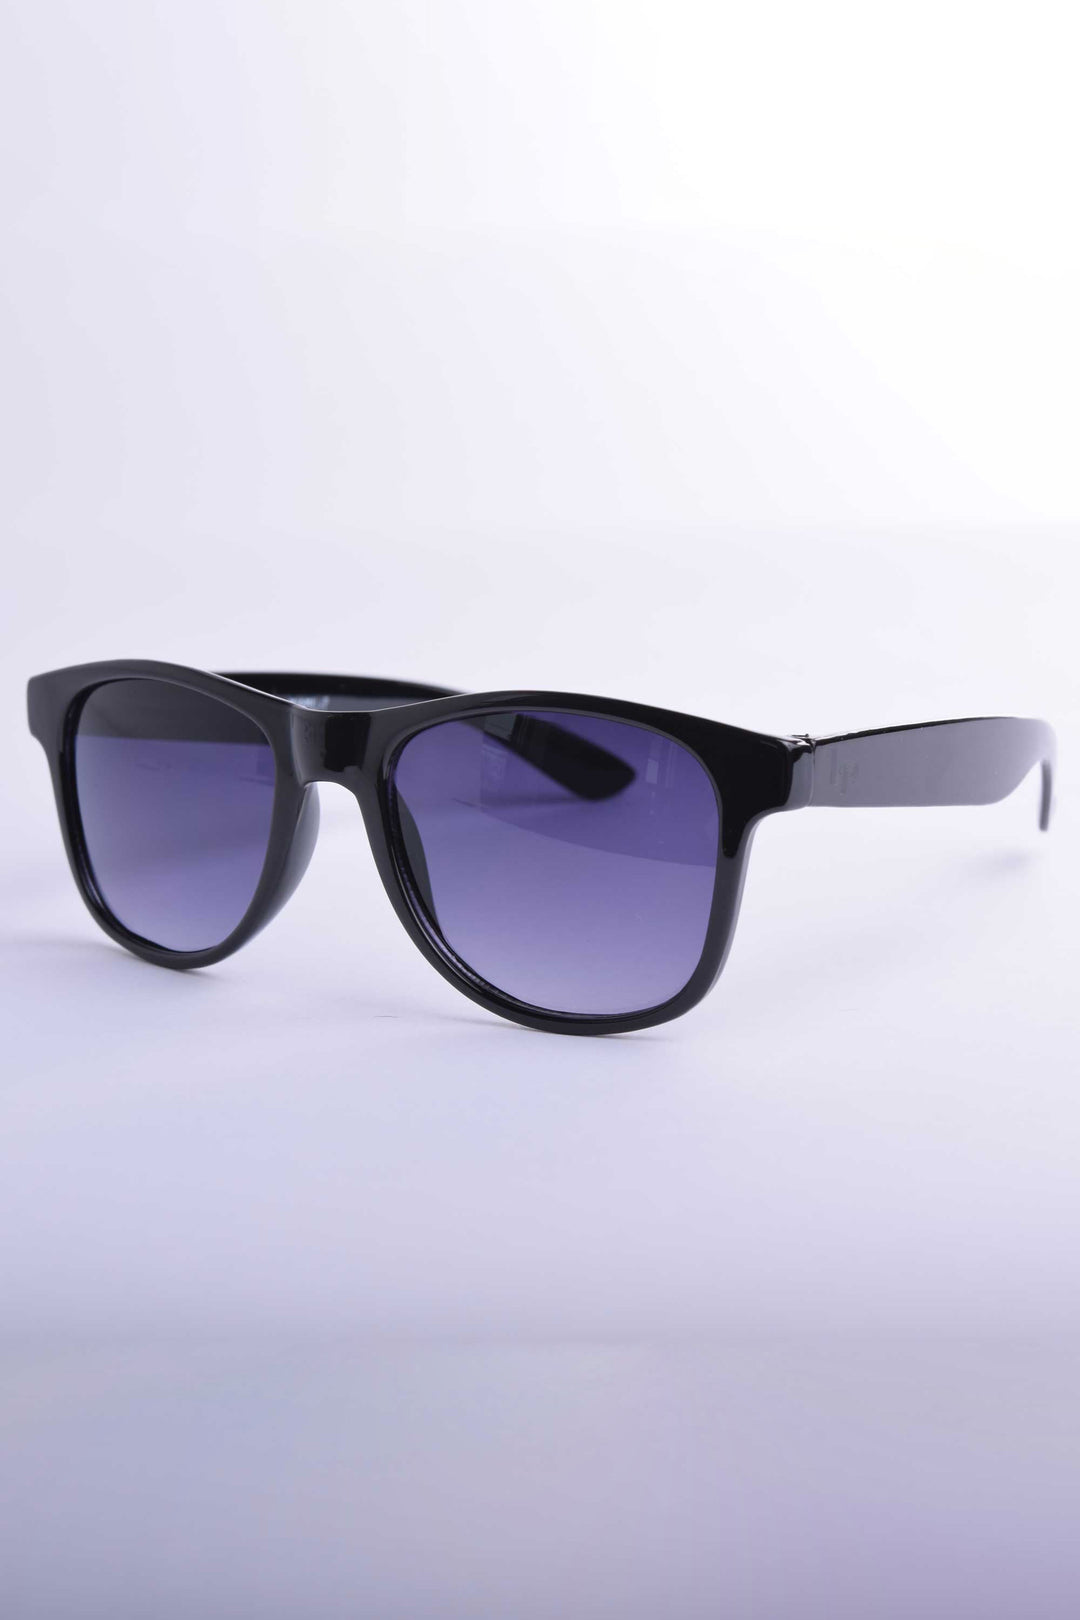 Sunglasses with polarized lenses [Miami]